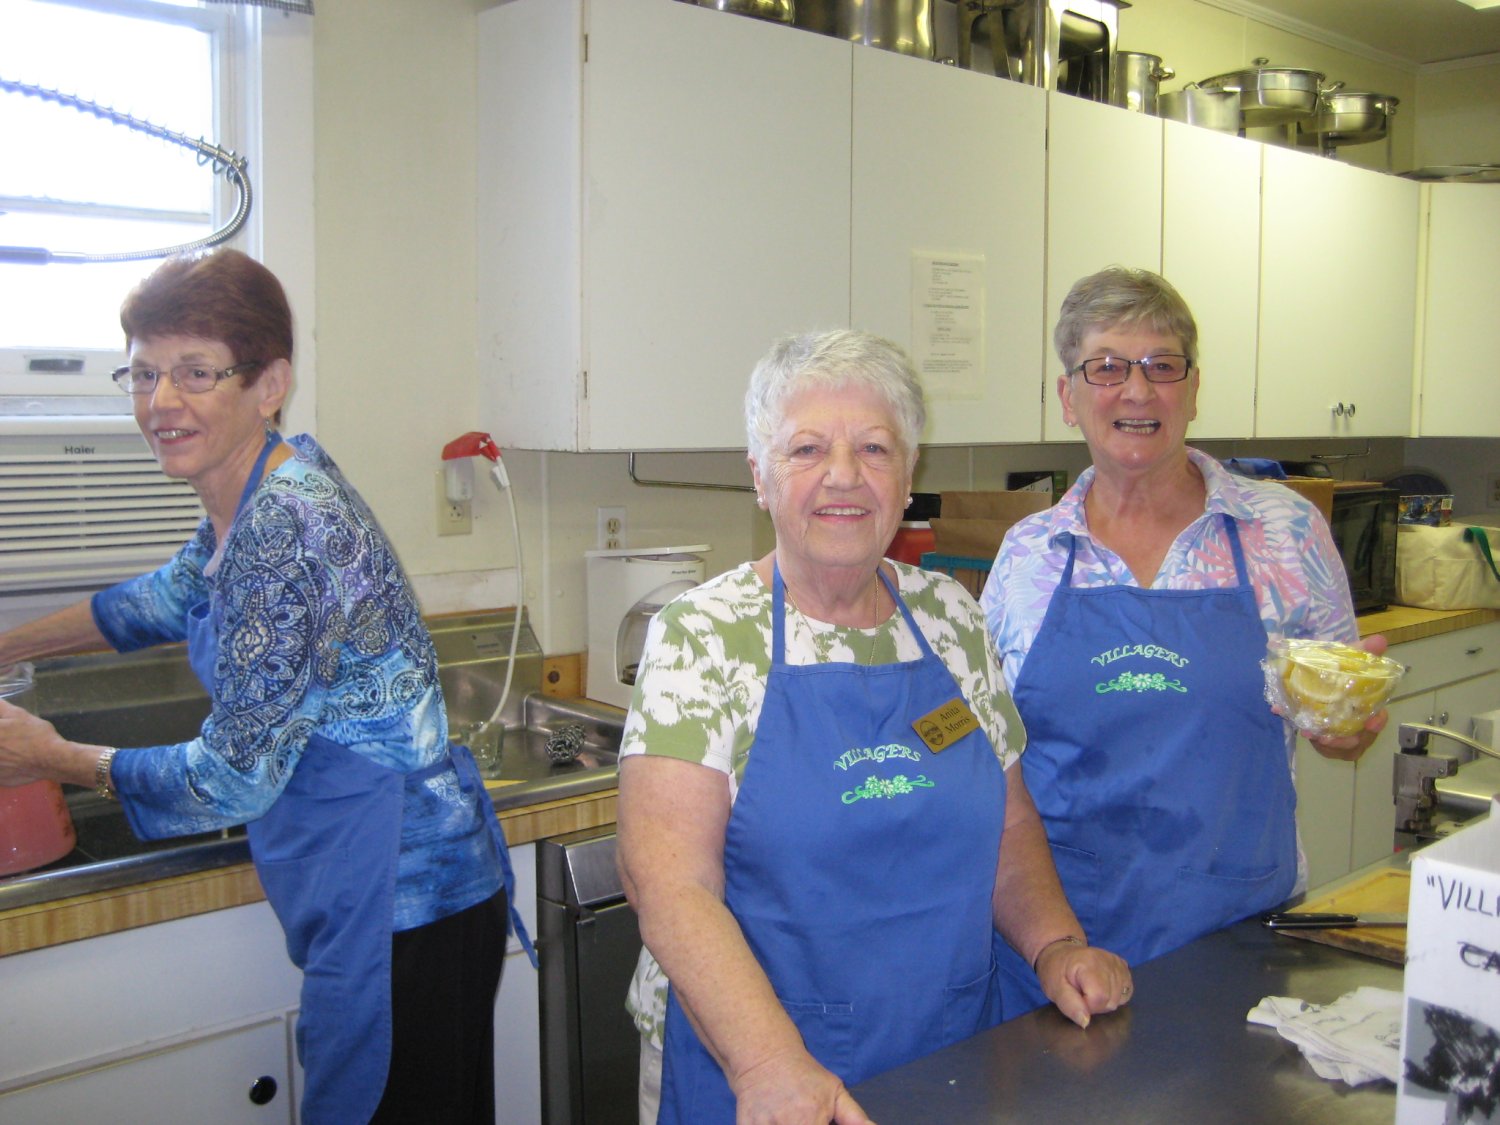  Some of the "Kitchen Crew" - Bea Trotta, Anita Morris, and Nancie Cameron.  